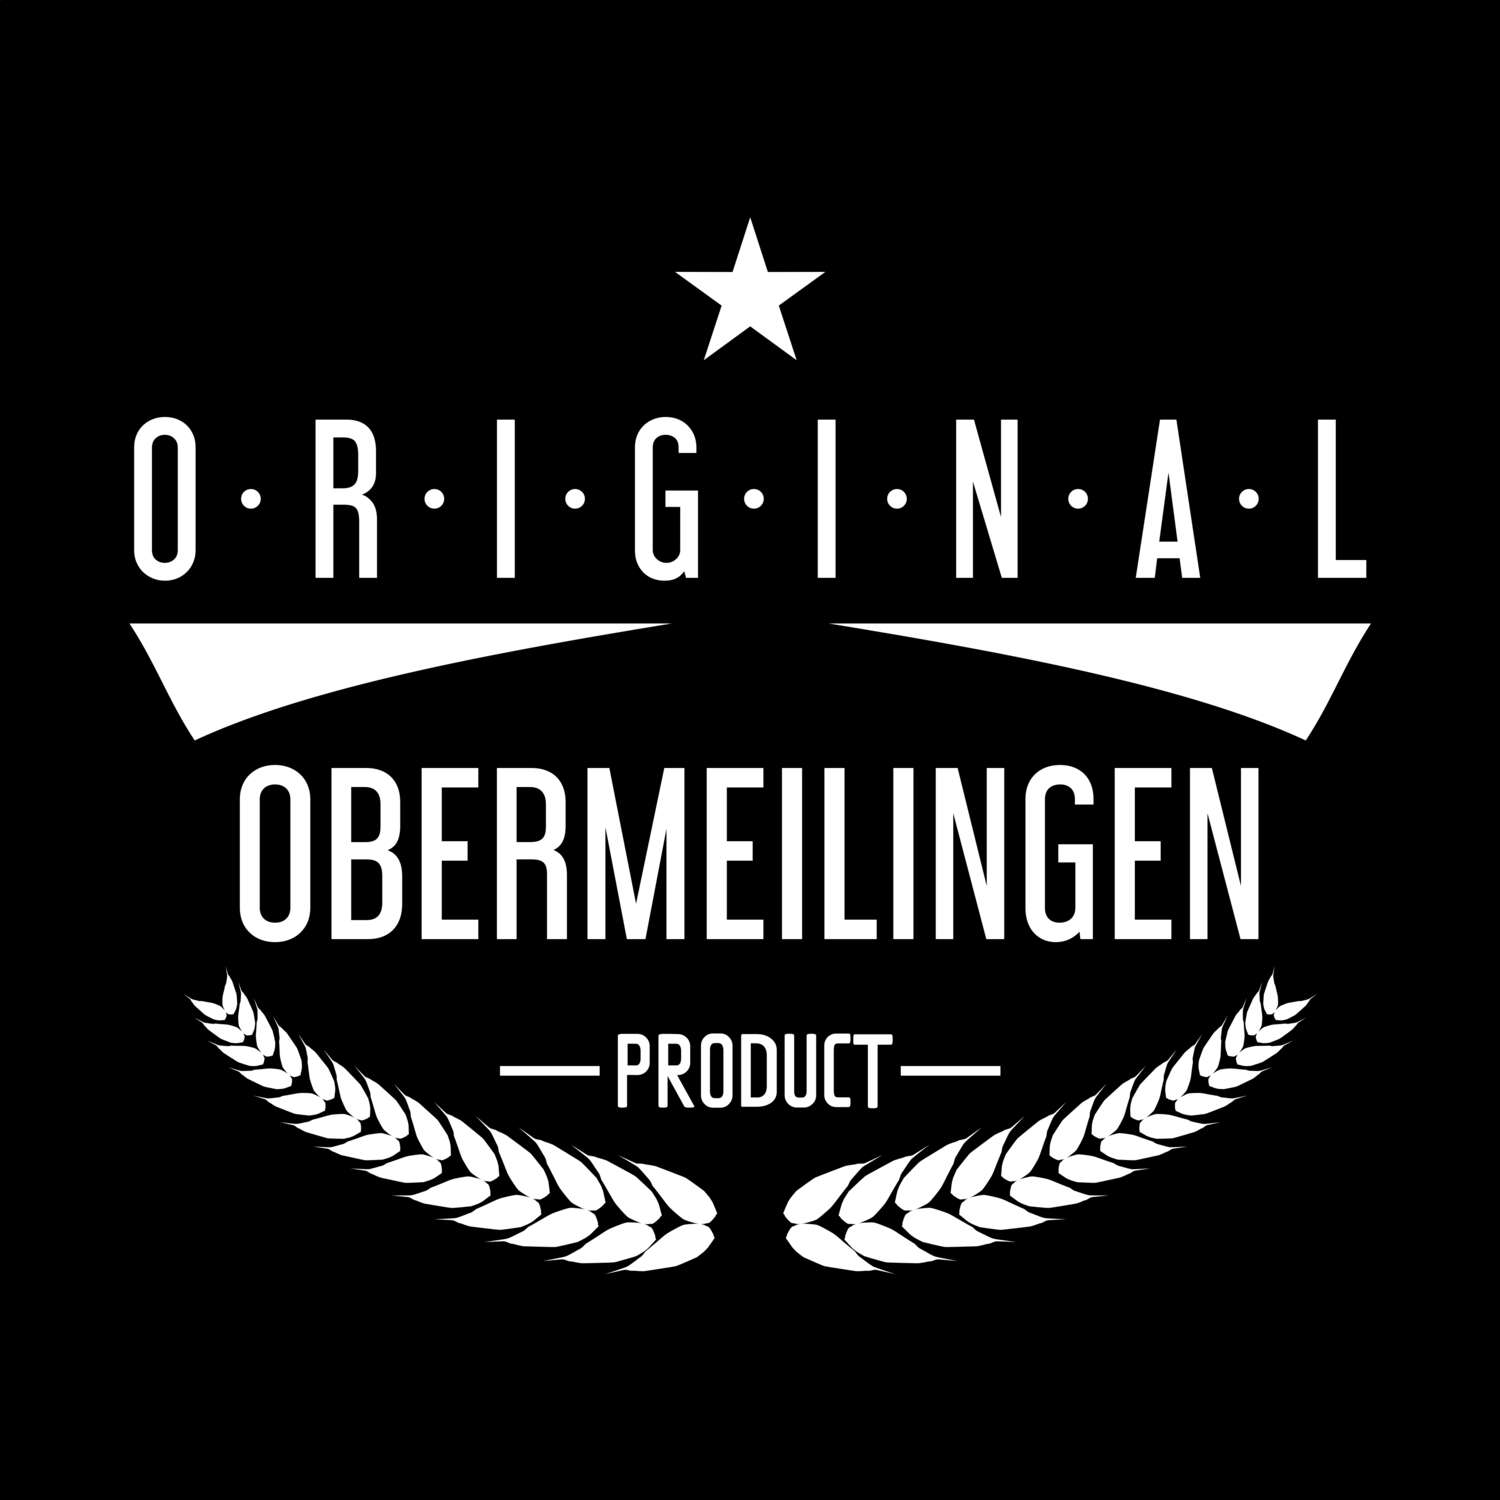 Obermeilingen T-Shirt »Original Product«